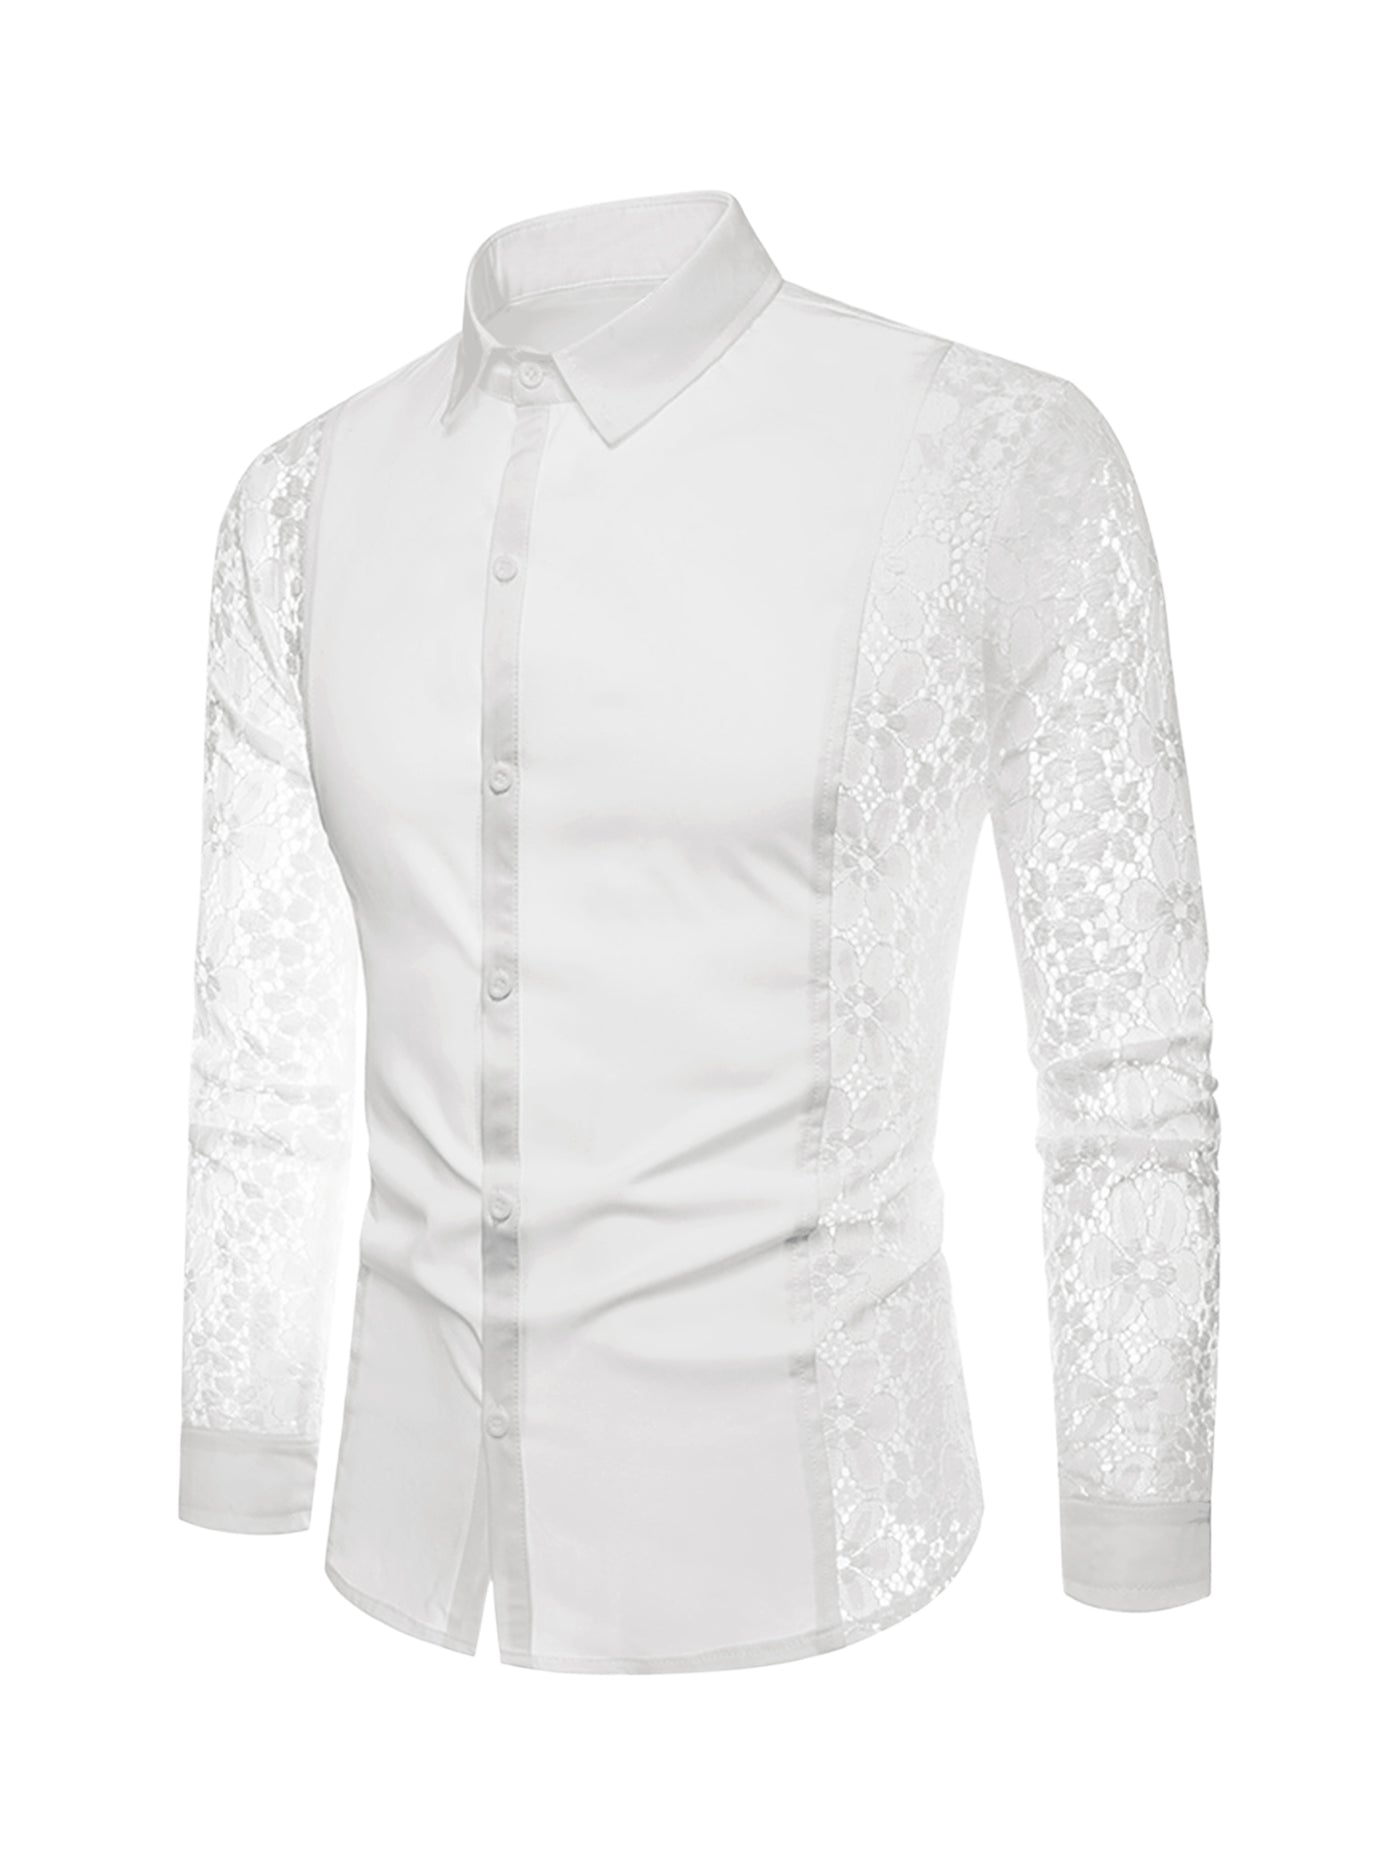 Bublédon Men's See Through Lace Sheer Sleeves Shirt Button Down Party Nightclub Shirts